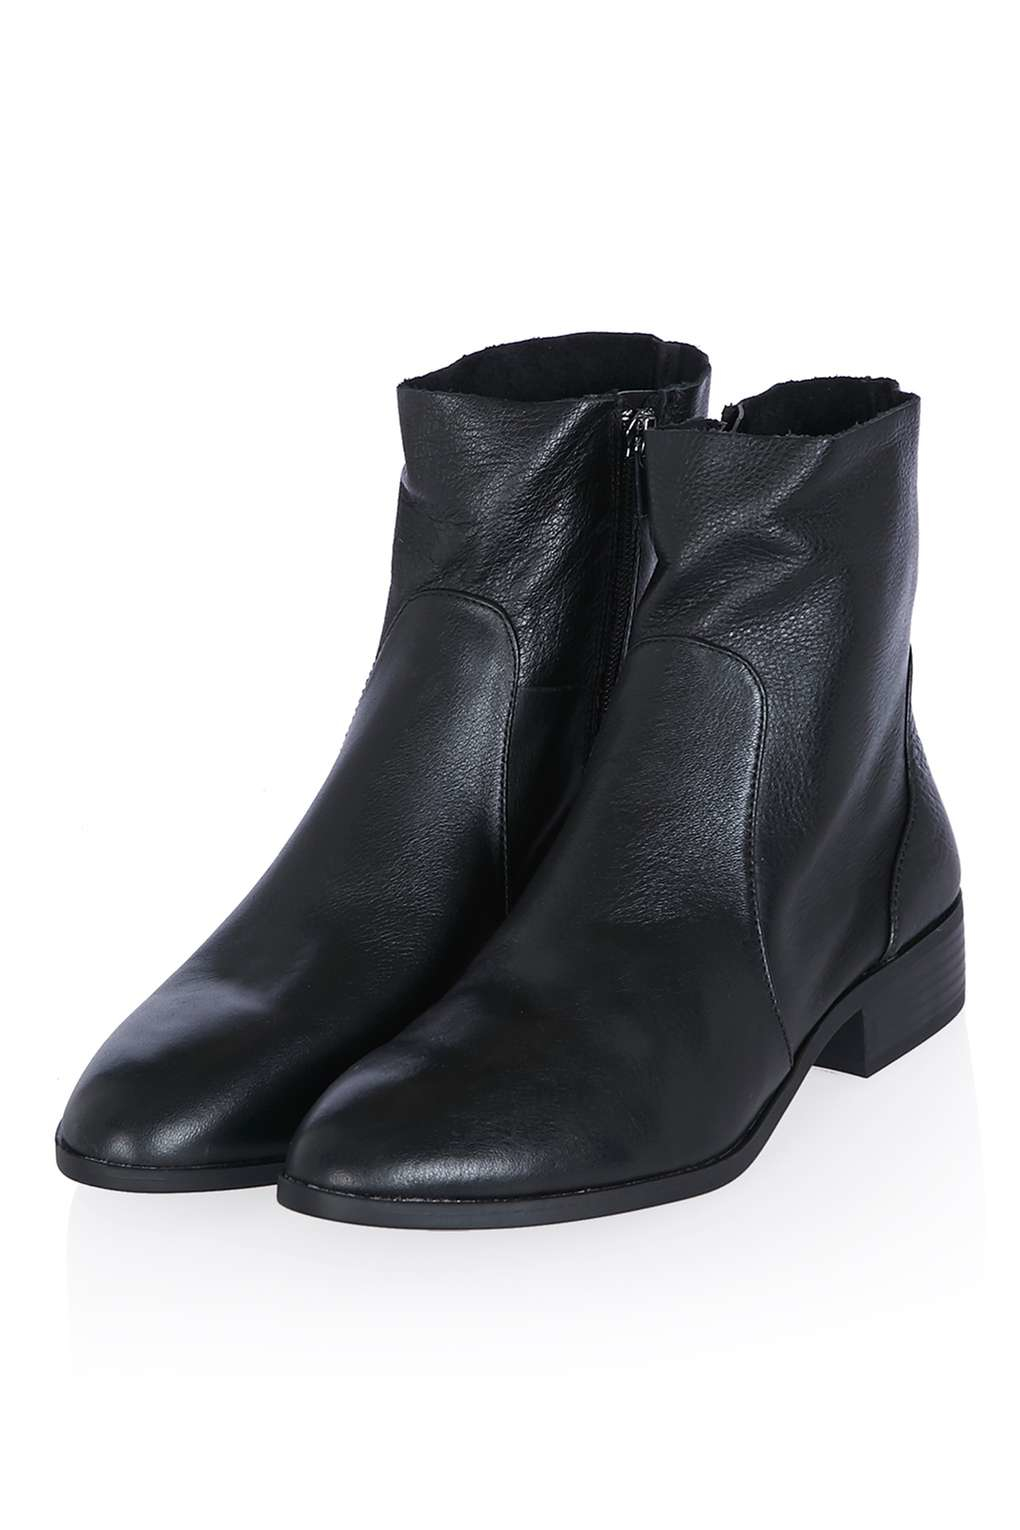 Topshop Klash Leather Sock Boots in Black | Lyst